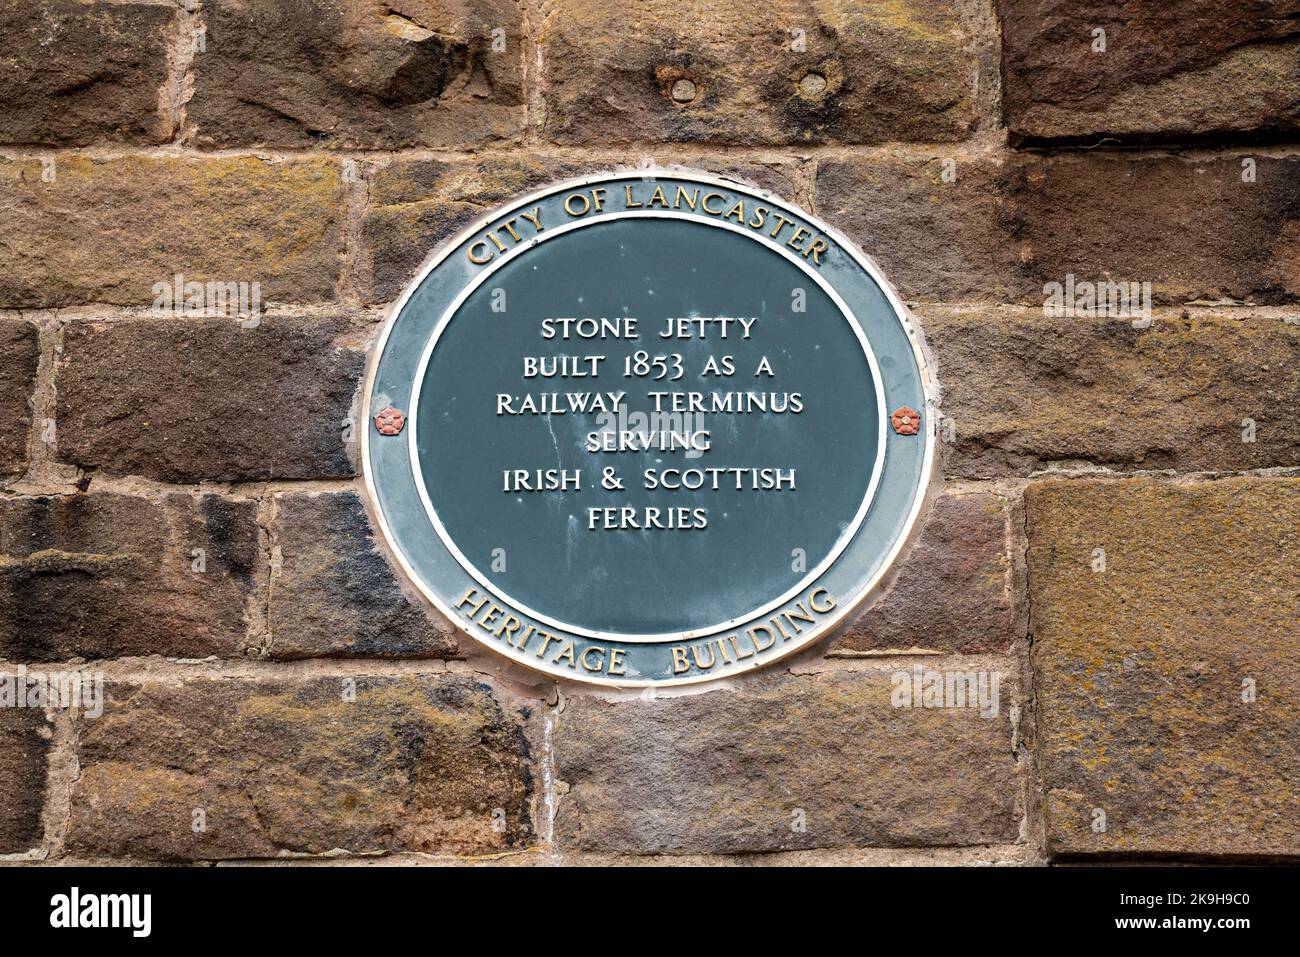 Stone Jetty Circular Plaque - Heritage Building,City of Lancaster Stock Photo